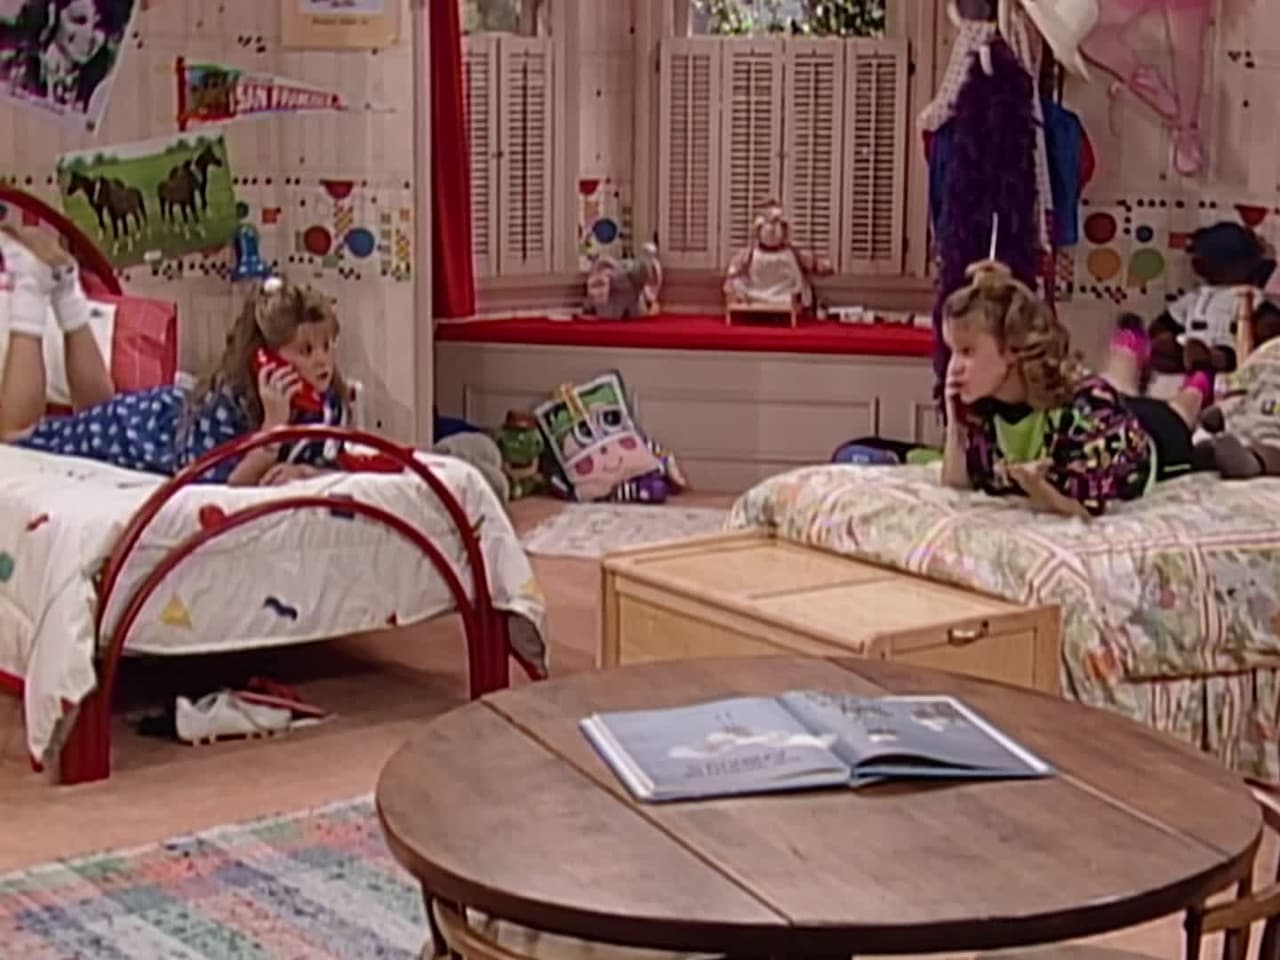 Full House - Season 3 Episode 14 : Misadventures in Babysitting